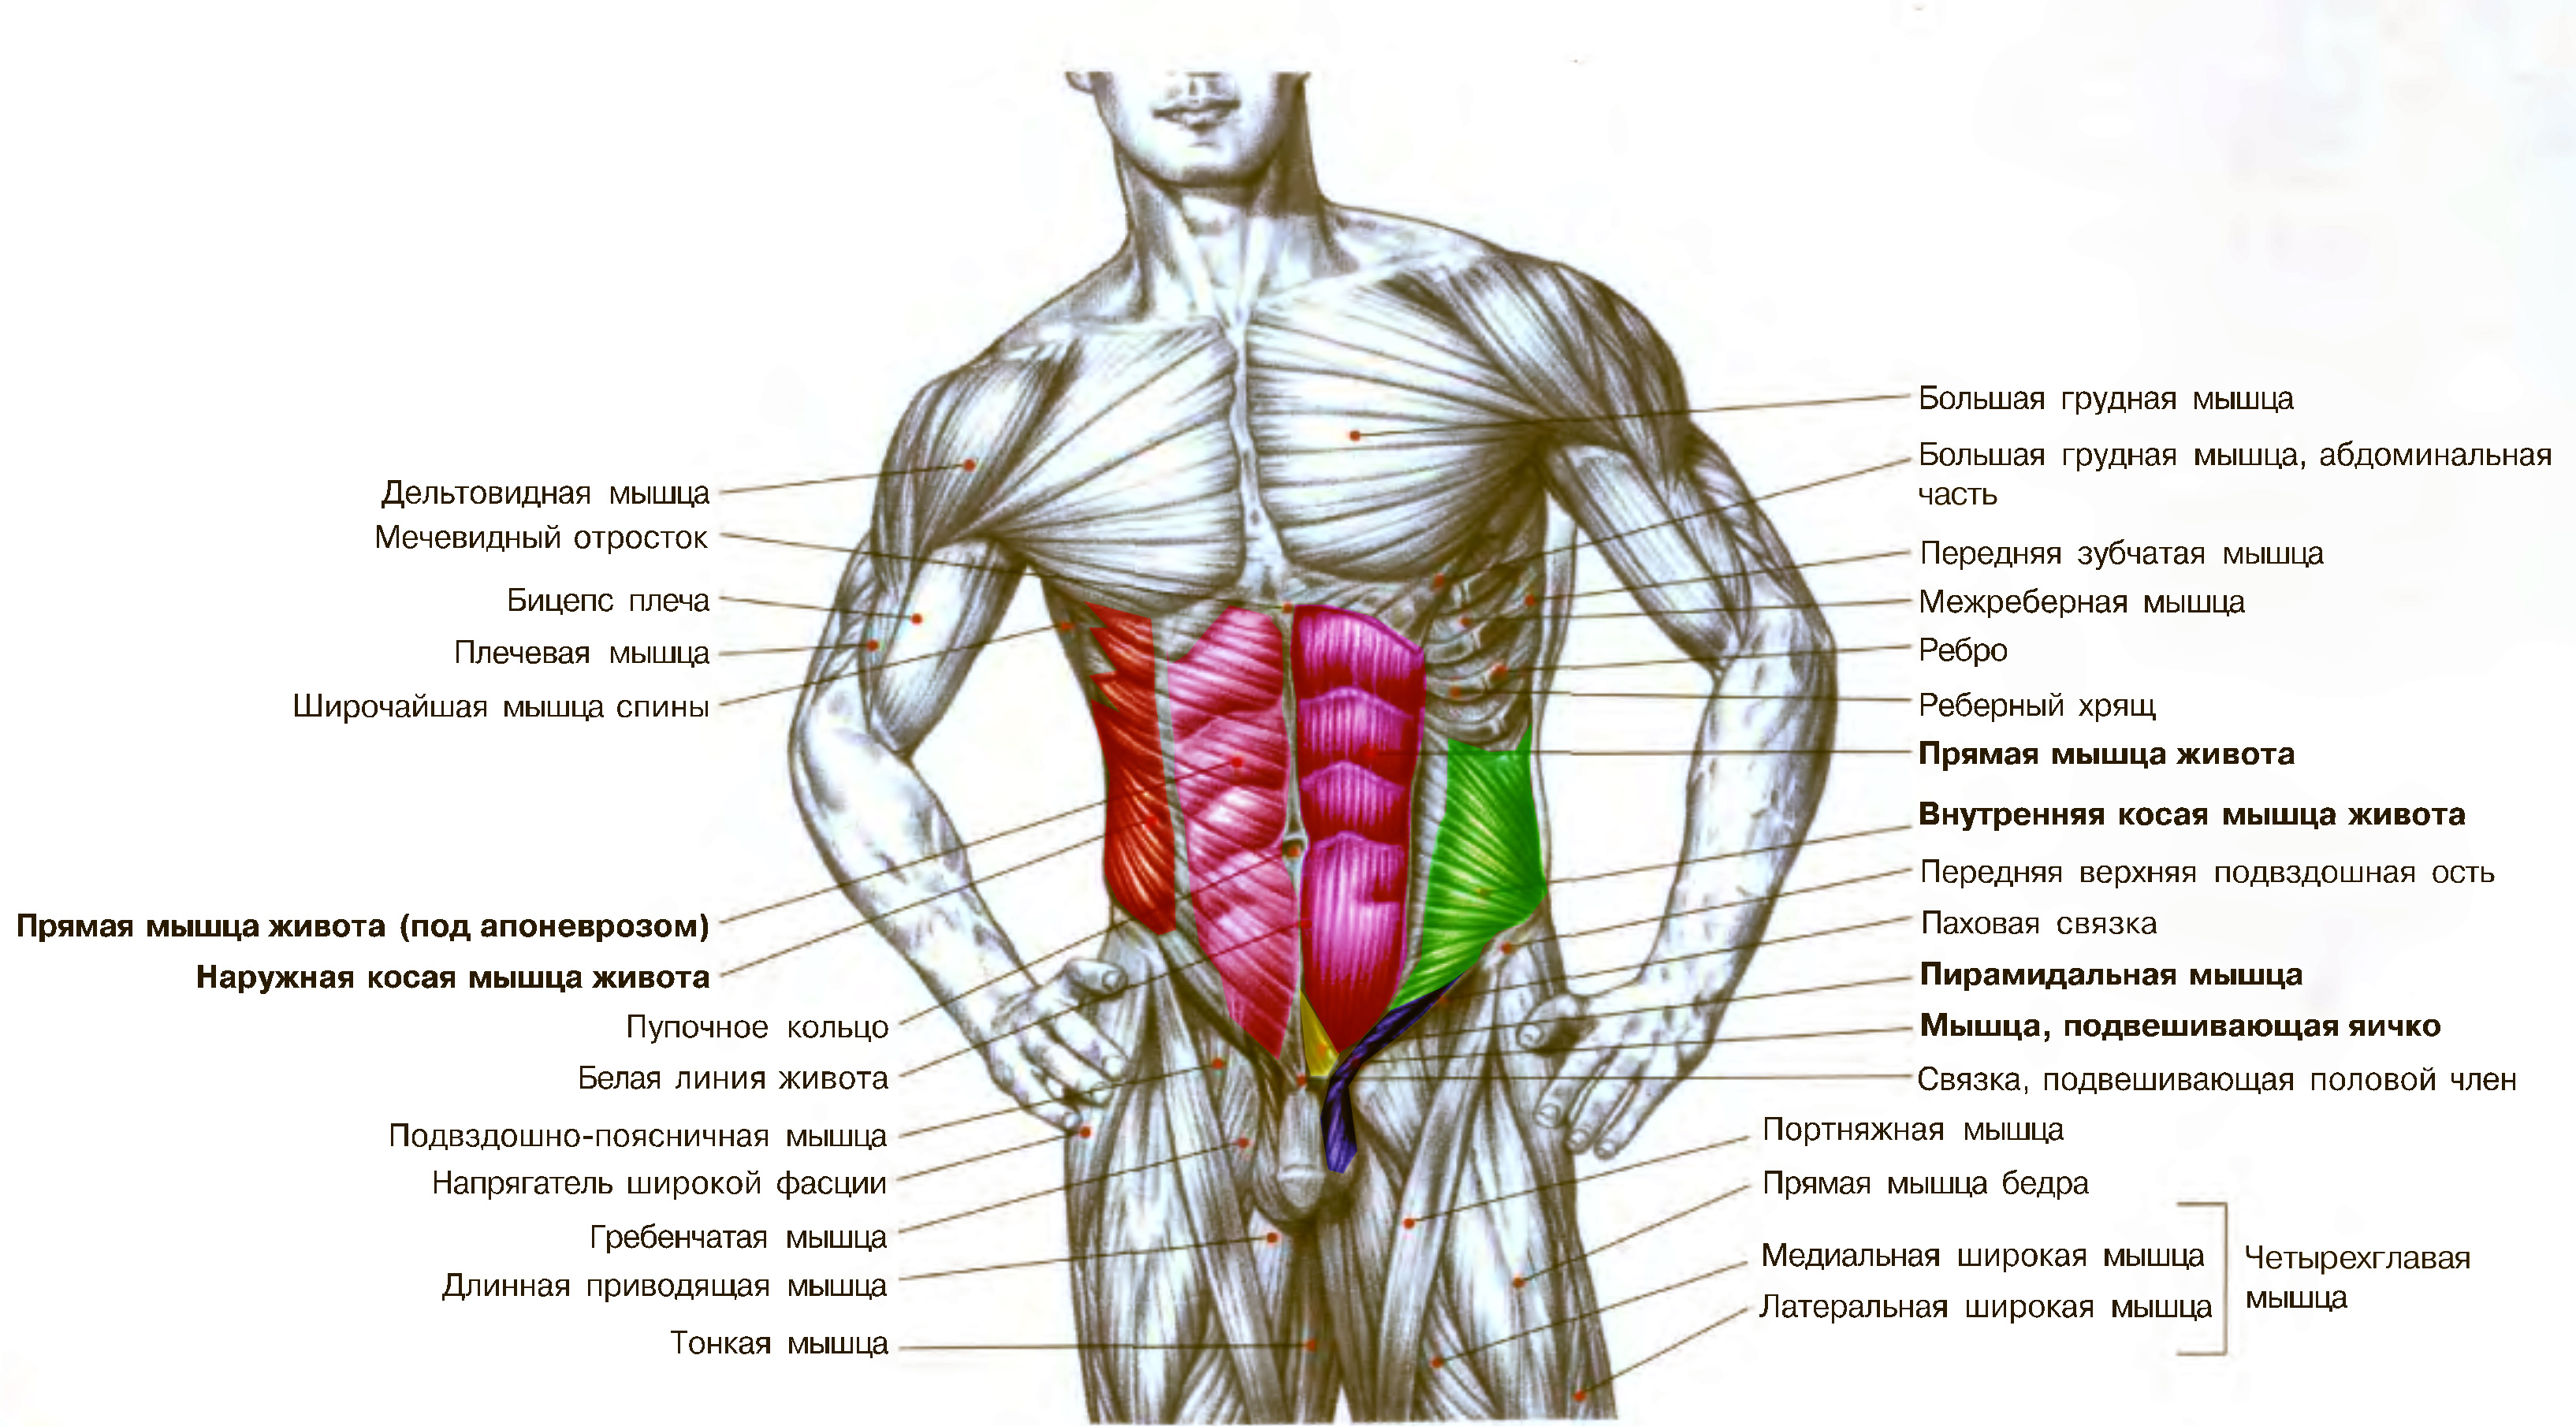 Схема мышц тела человека / ©Flickr